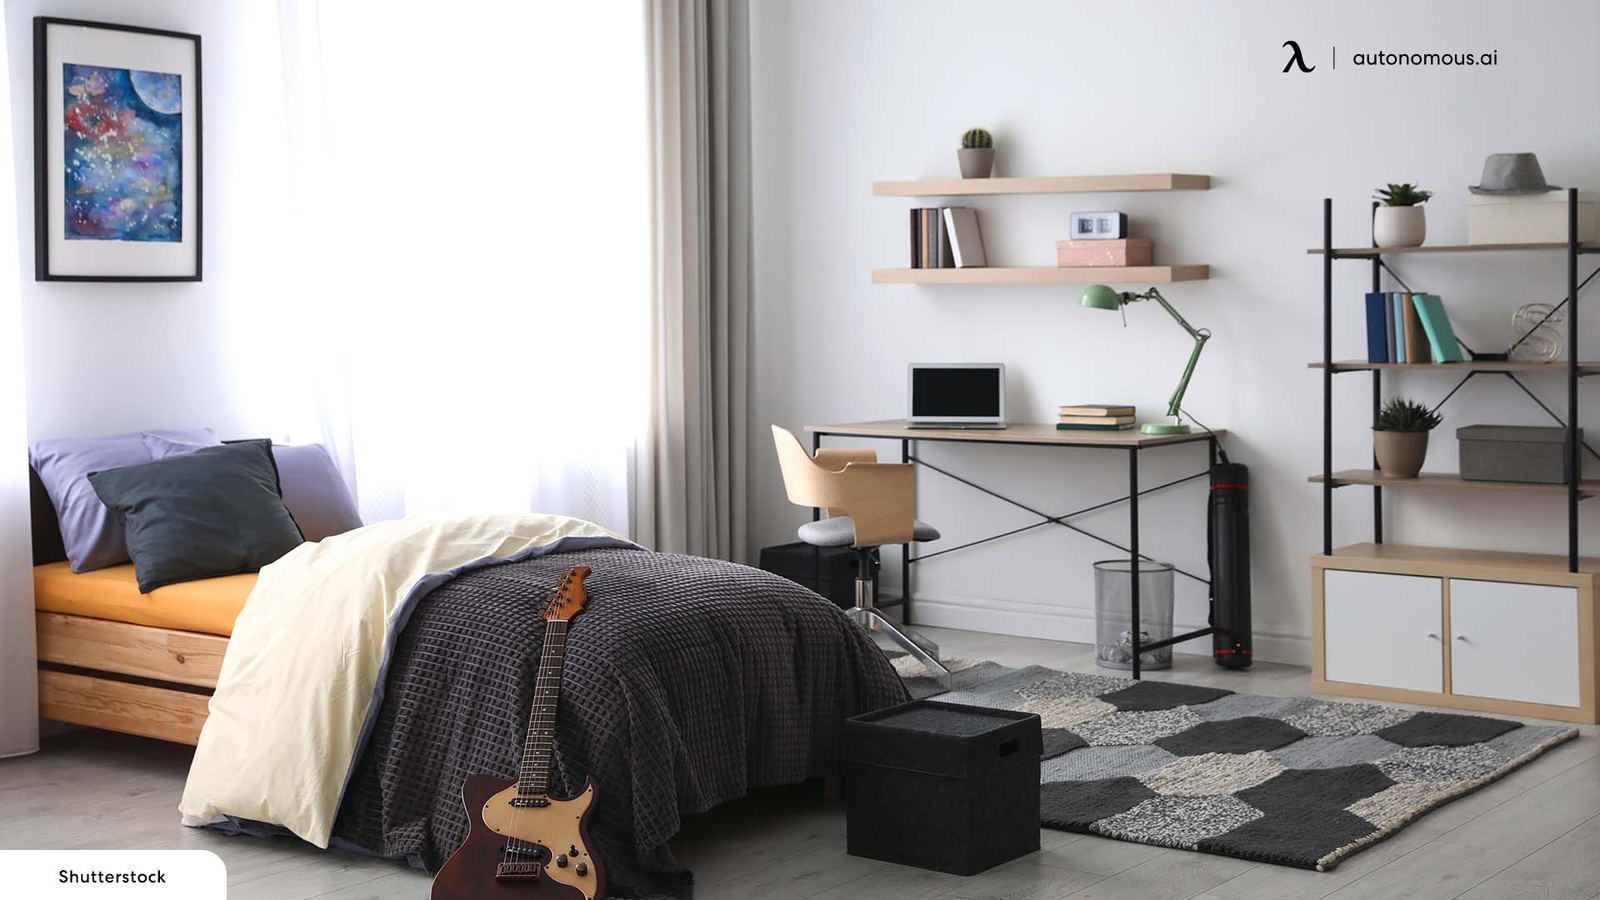 5 Bedroom Office Design Ideas of 2023